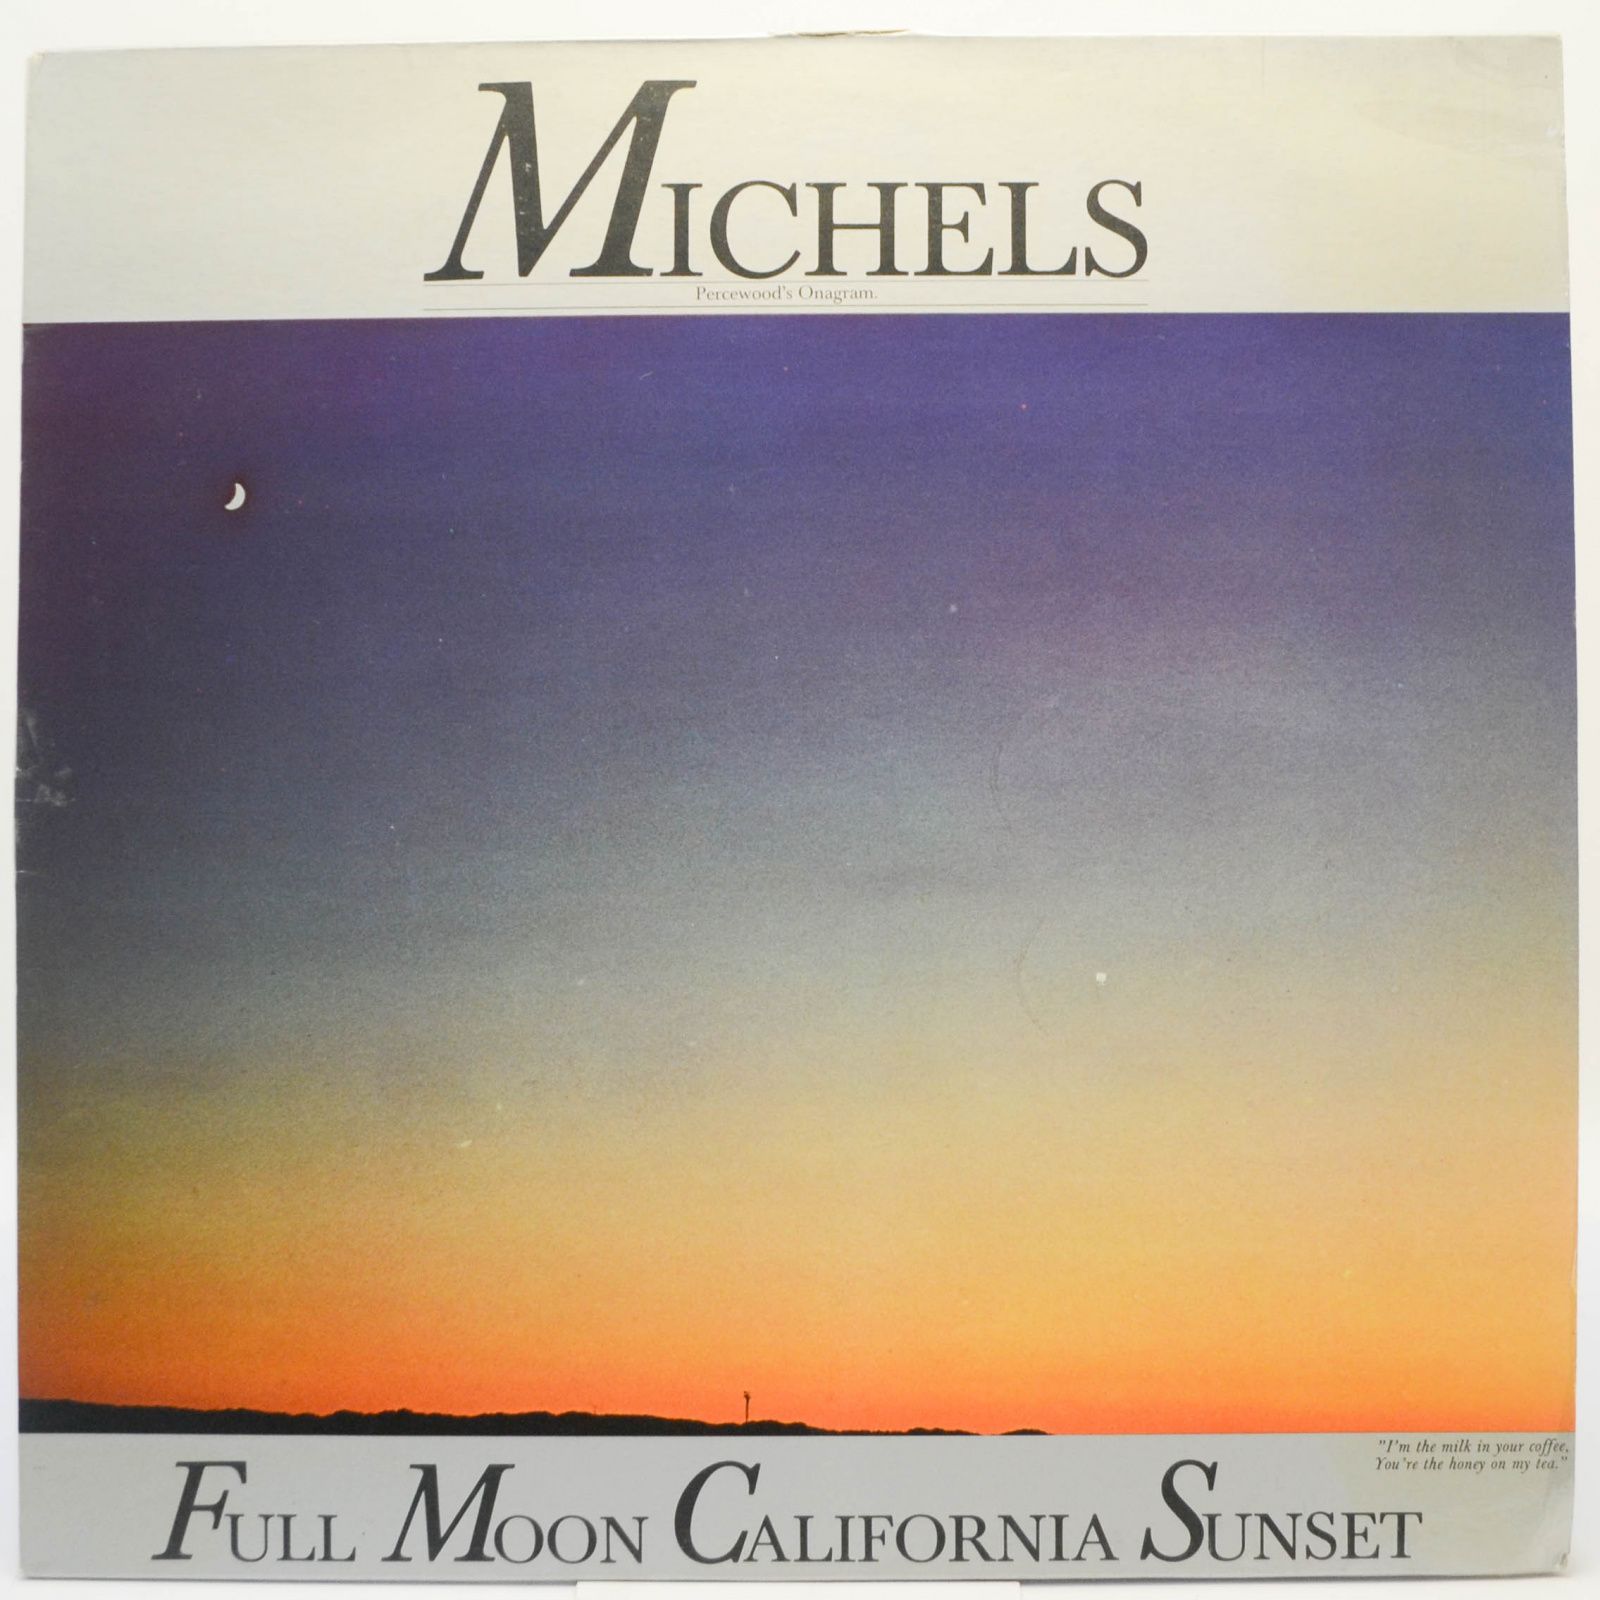 Full Moon California Sunset, 1978